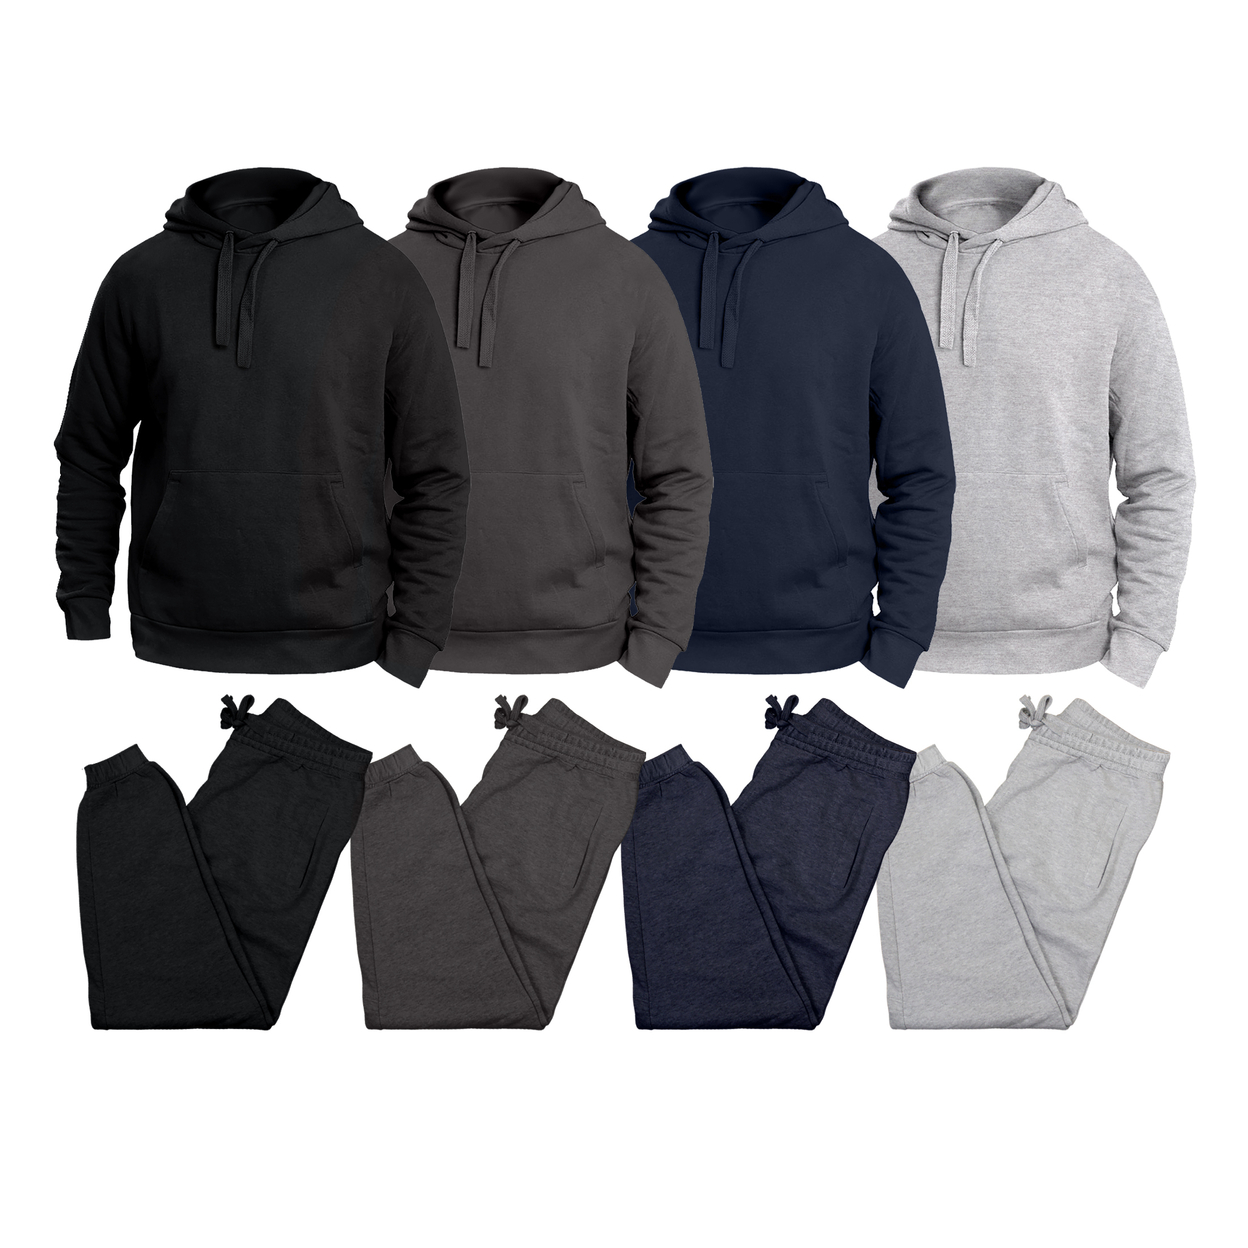 Multi-Pack: Big & Tall Men's Winter Warm Cozy Athletic Fleece Lined Multi-Pocket Cargo Sweatsuit - Grey, 2-pack, Small